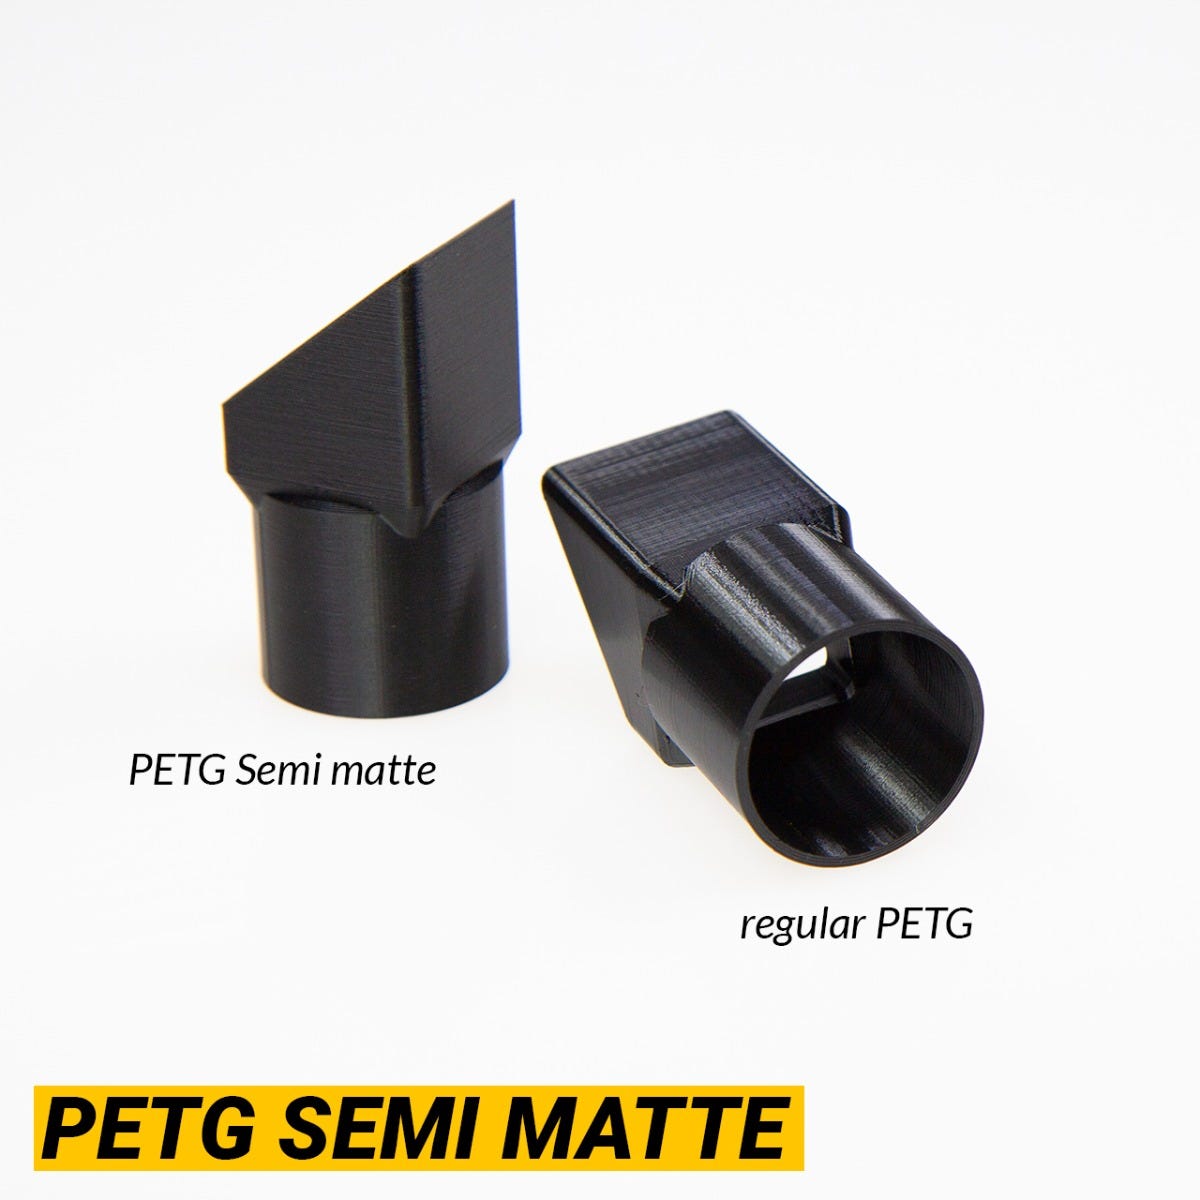 Colorfabb PETG Semi Matte Filament 1.75mm 750g